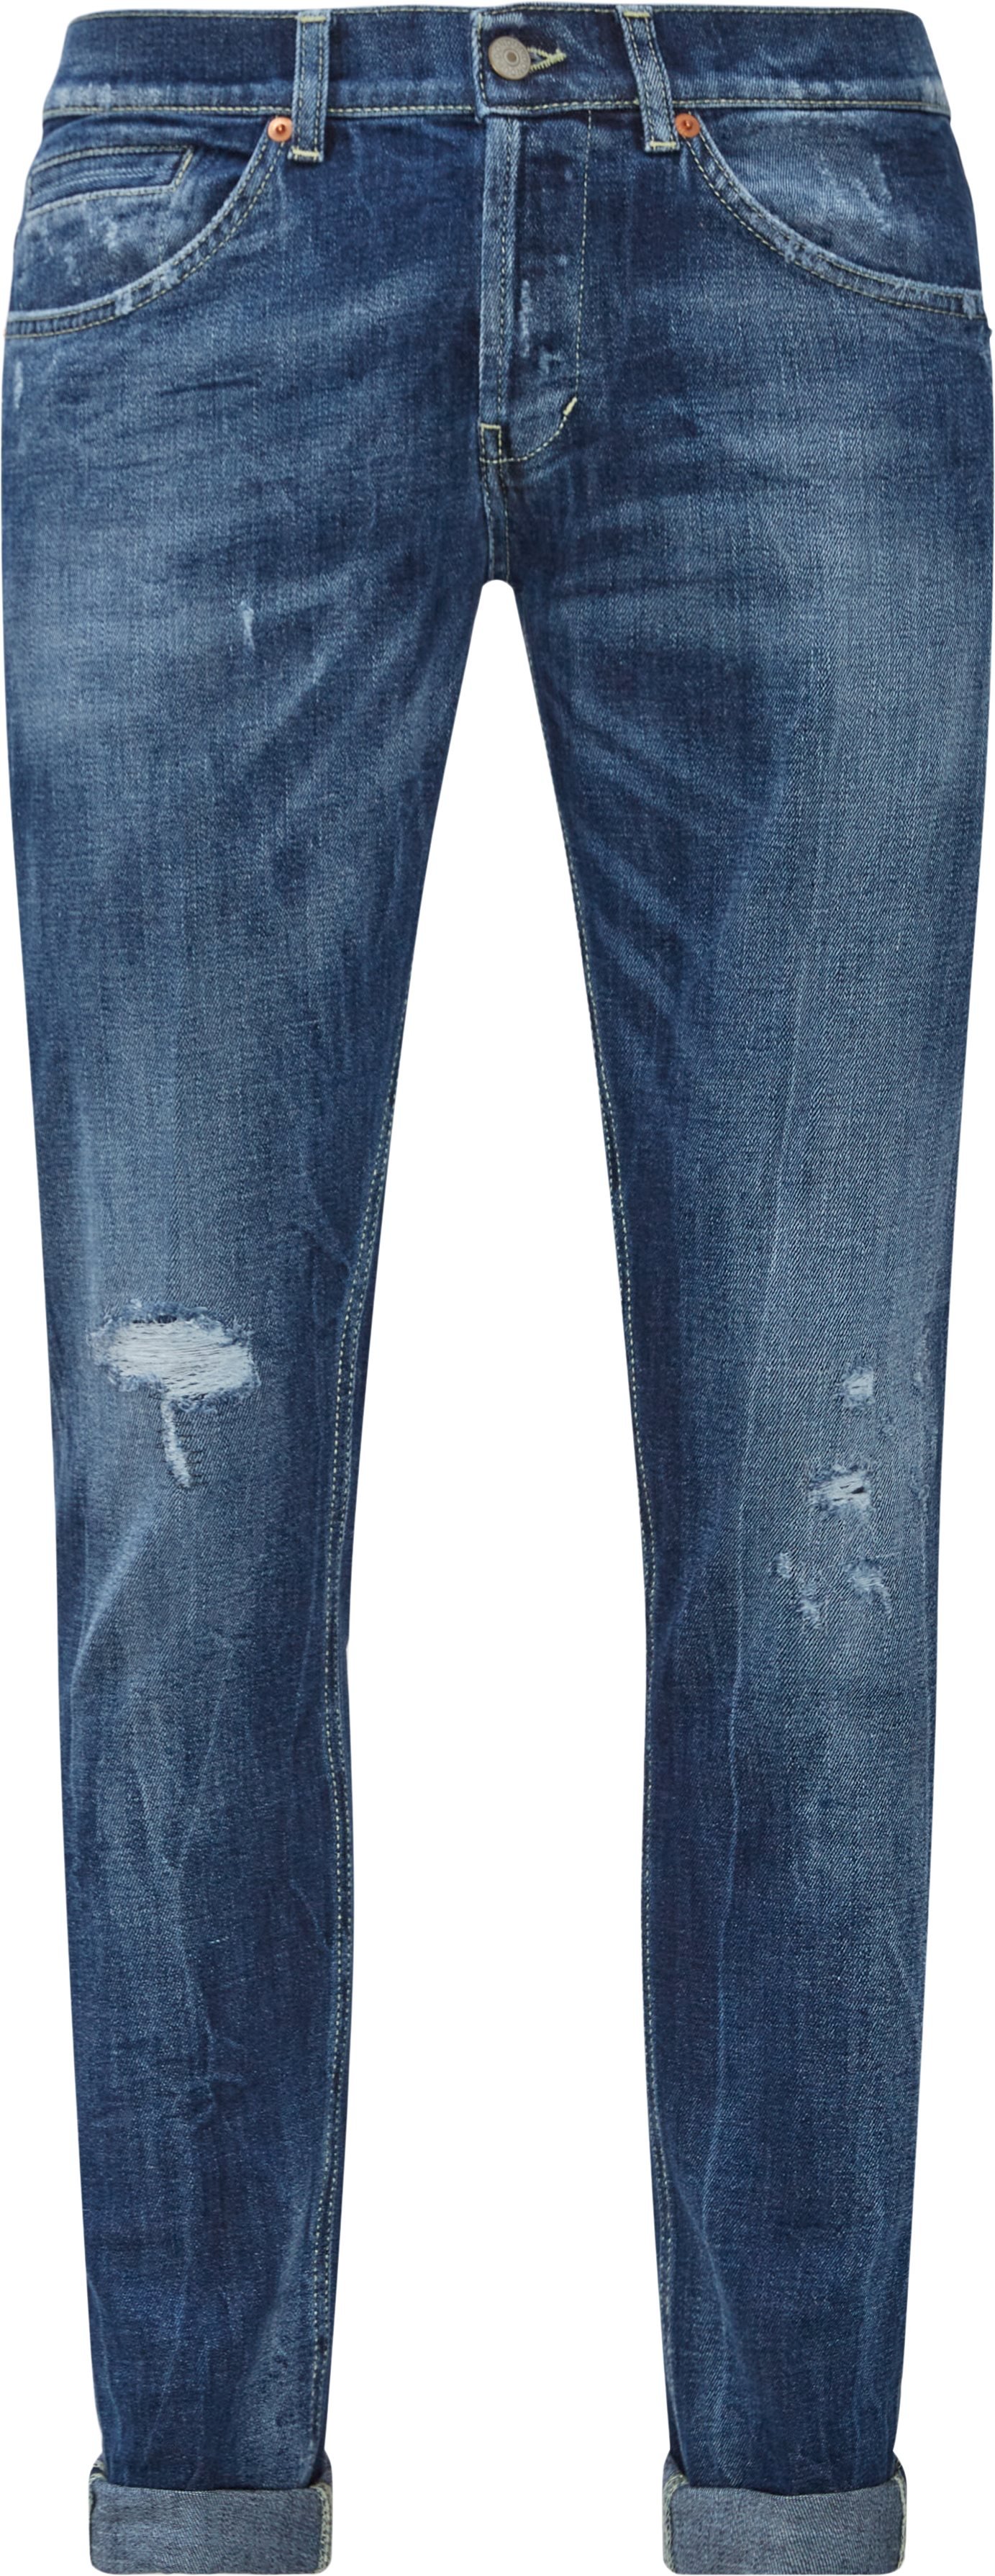 George Jeans - Jeans - Skinny fit - Blå